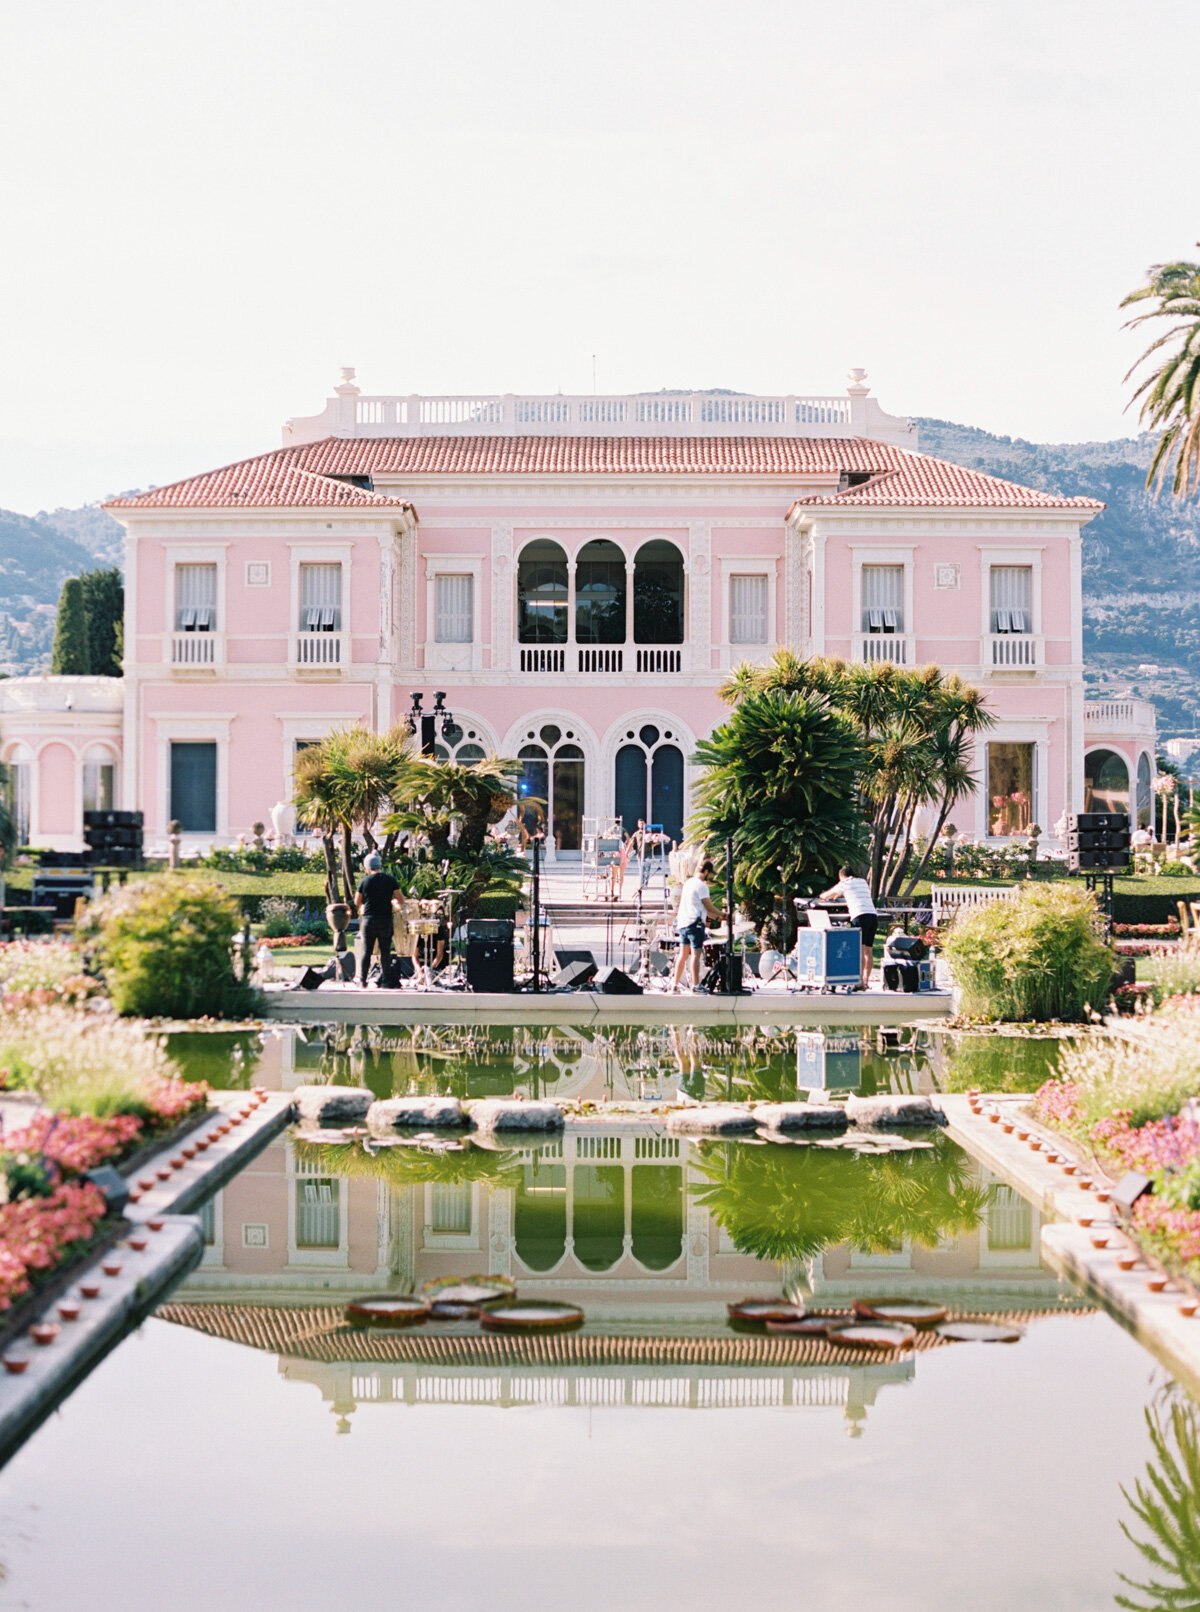 Villa-Ephrussi-de-Rothschild-Monaco-Nice-Saint Tropez-Welcome-Dinner-Katie-Grant-destination-wedding (6 of 37).jpg